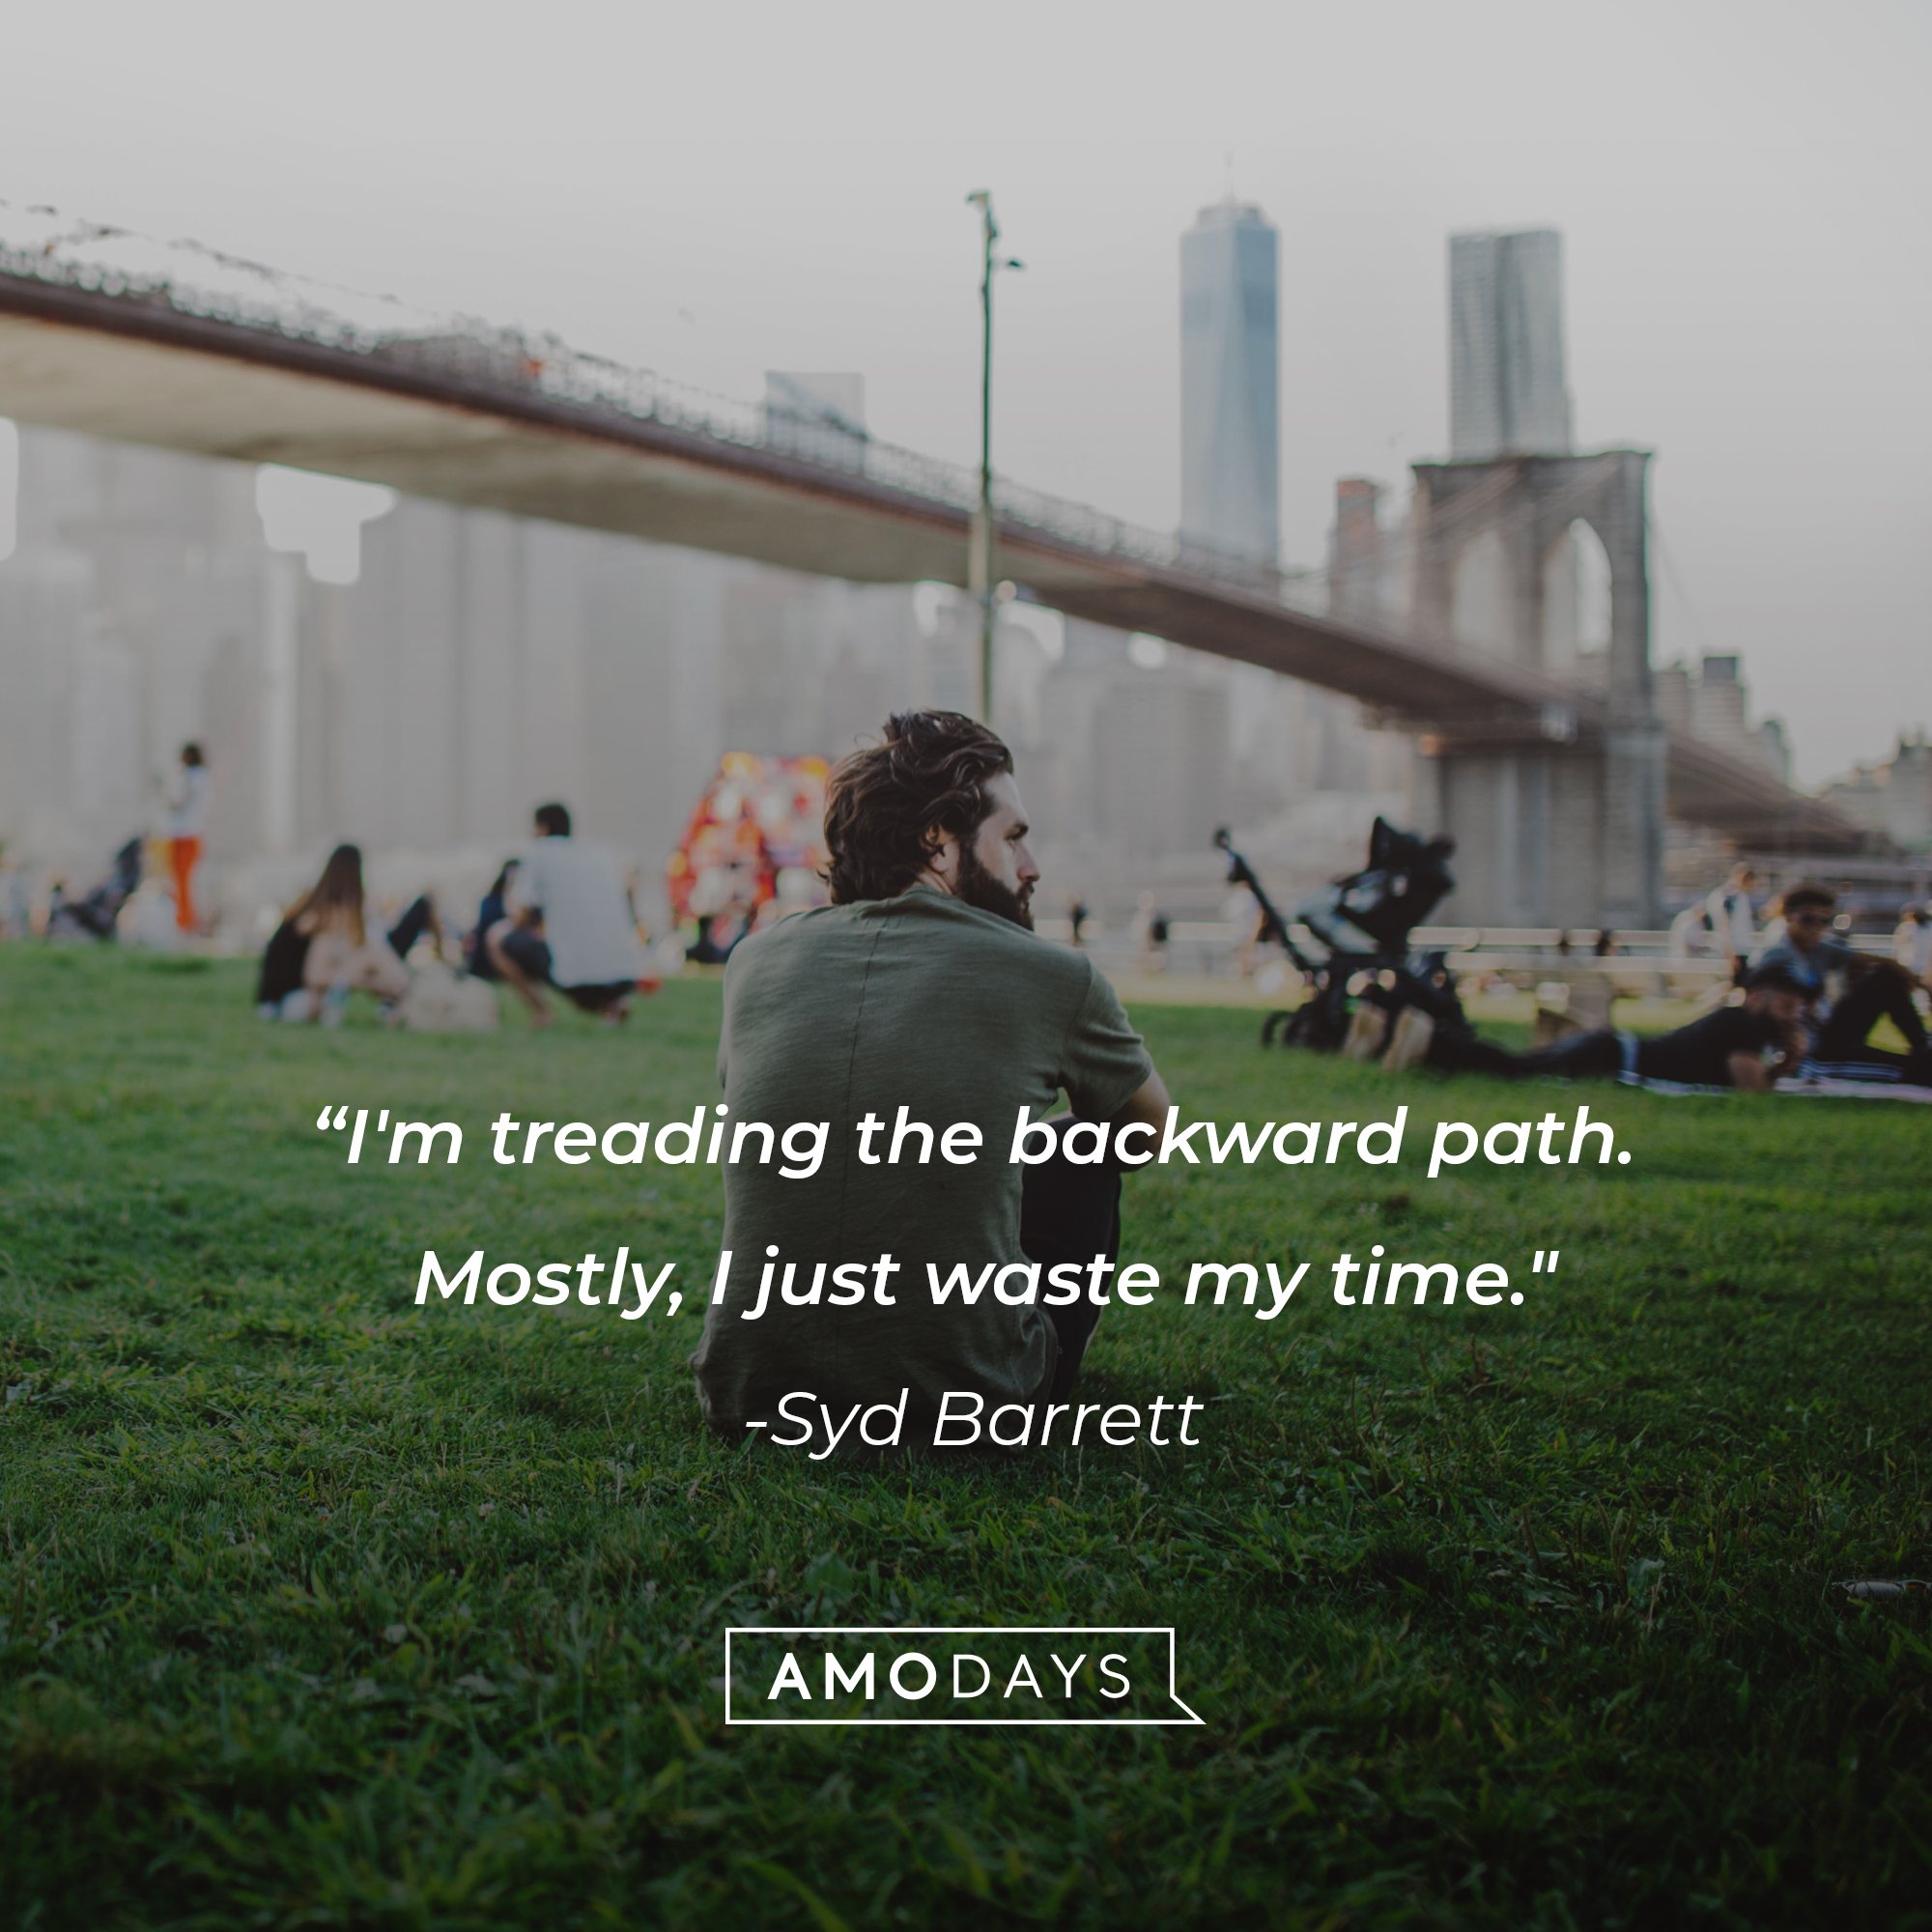 Syd Barrett’s quote: “I'm treading the backward path. Mostly, I just waste my time." | Image: AmoDays 